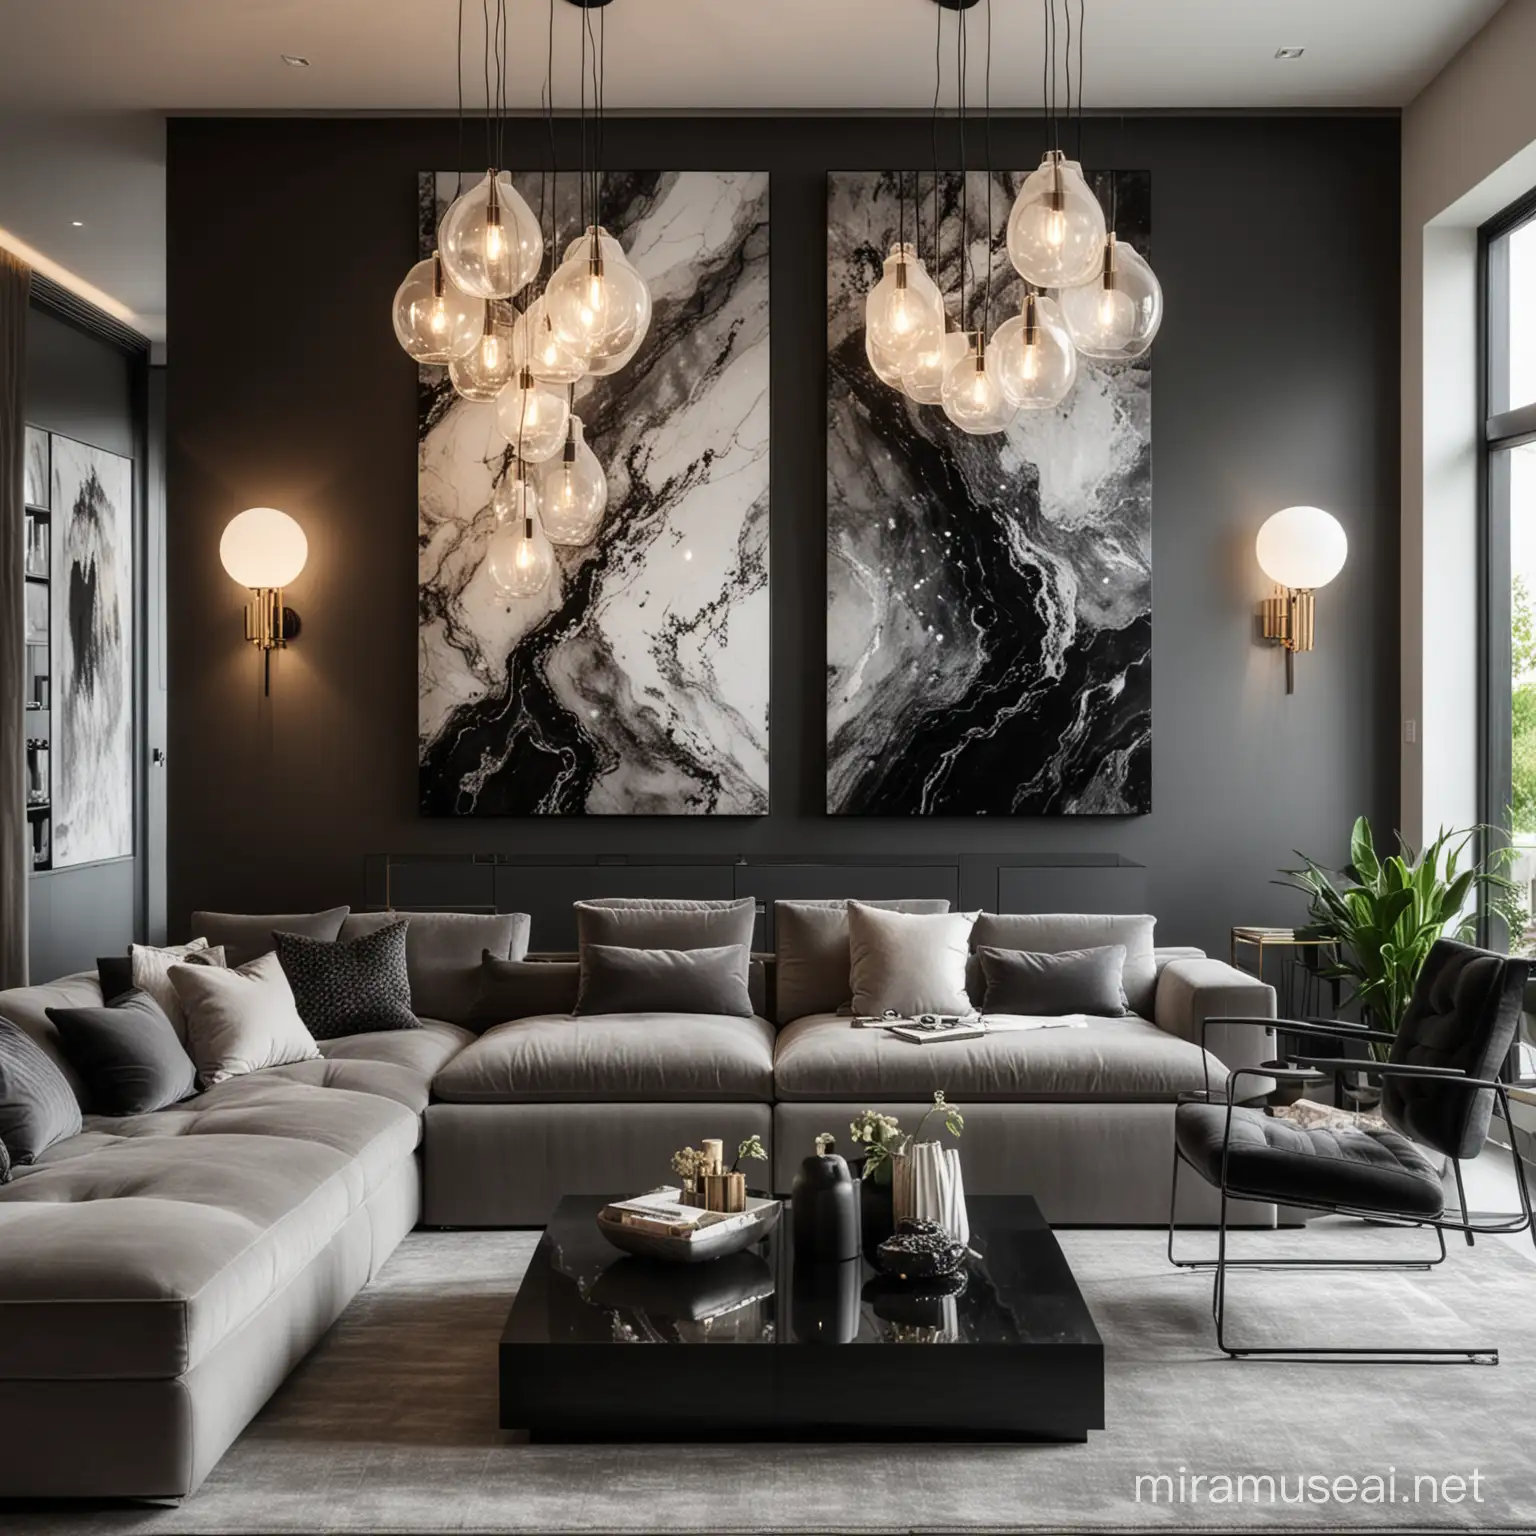 Contemporary Quartz Living Room with Artistic Wall Decor and Elegant Black Accents